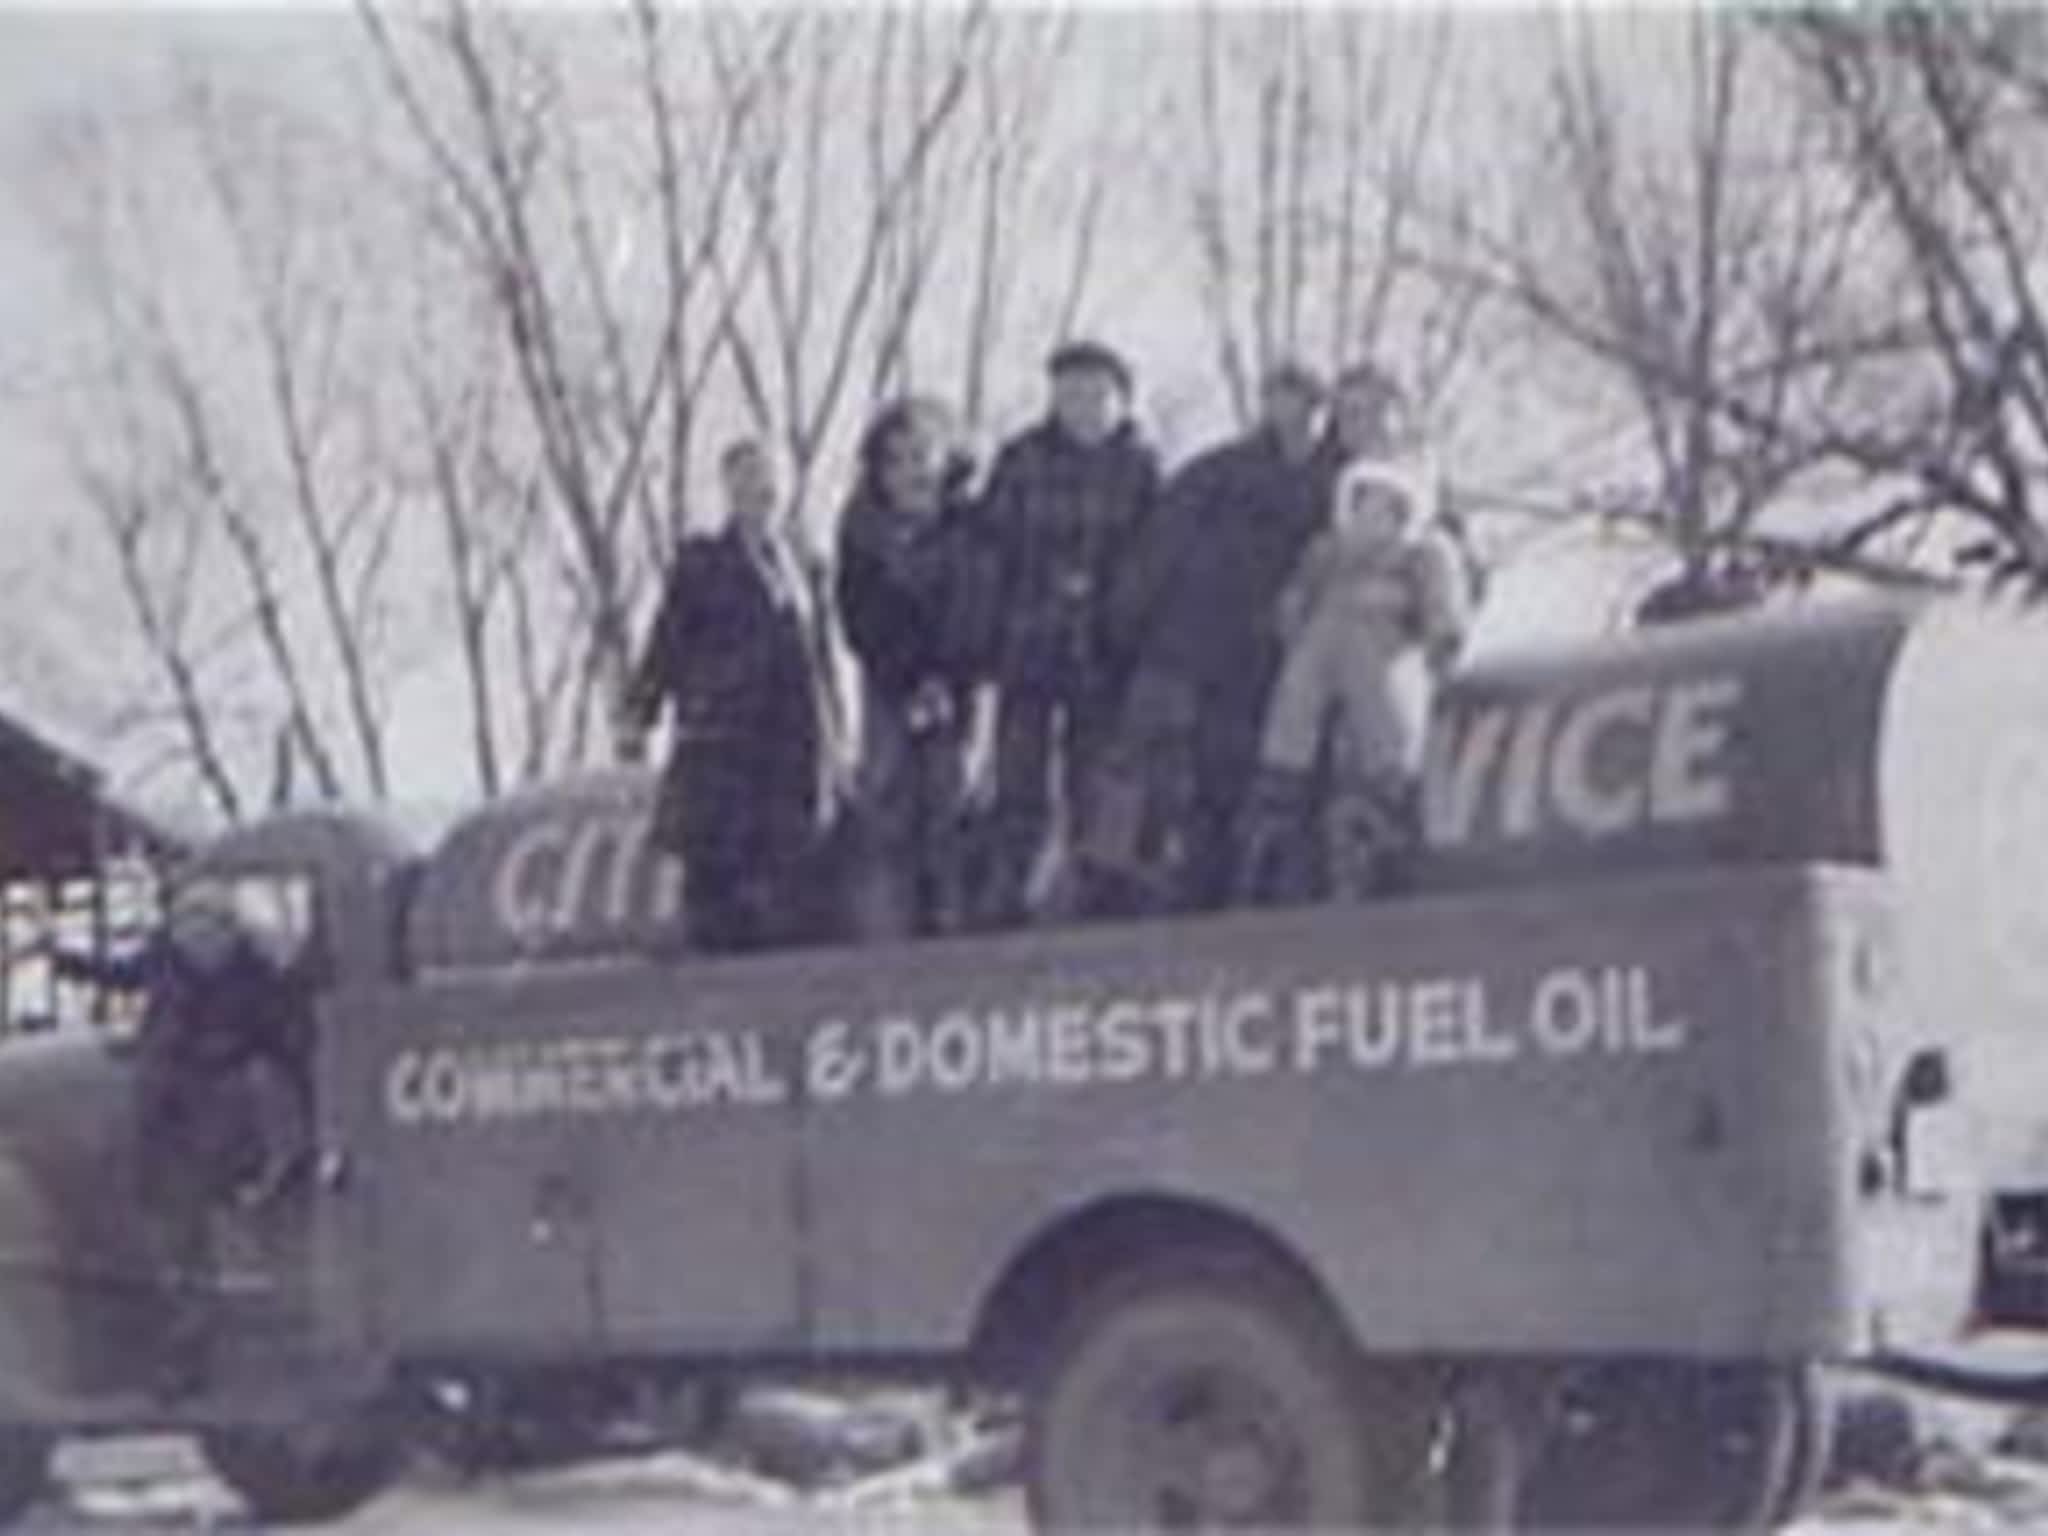 photo Earl Rosebush Fuels